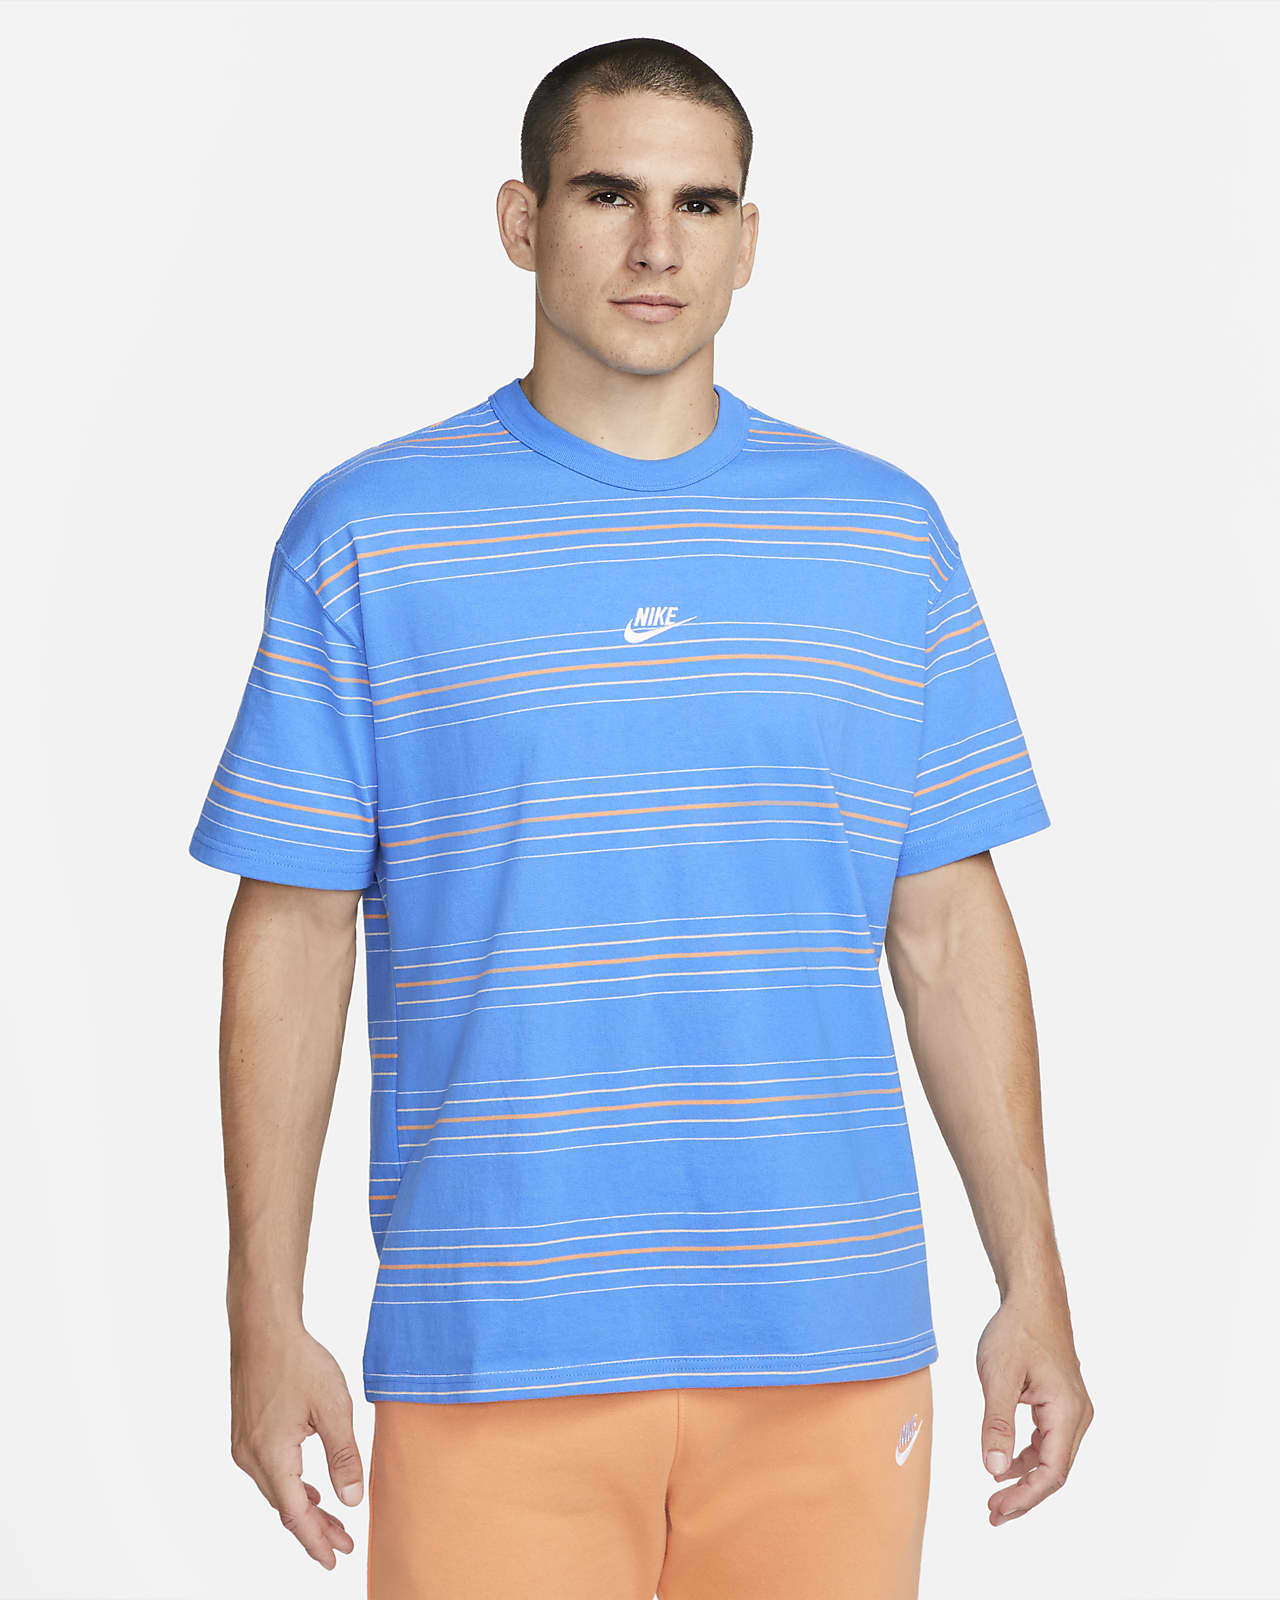 Nike Sportswear Premium Essentials Men's Striped T-Shirt